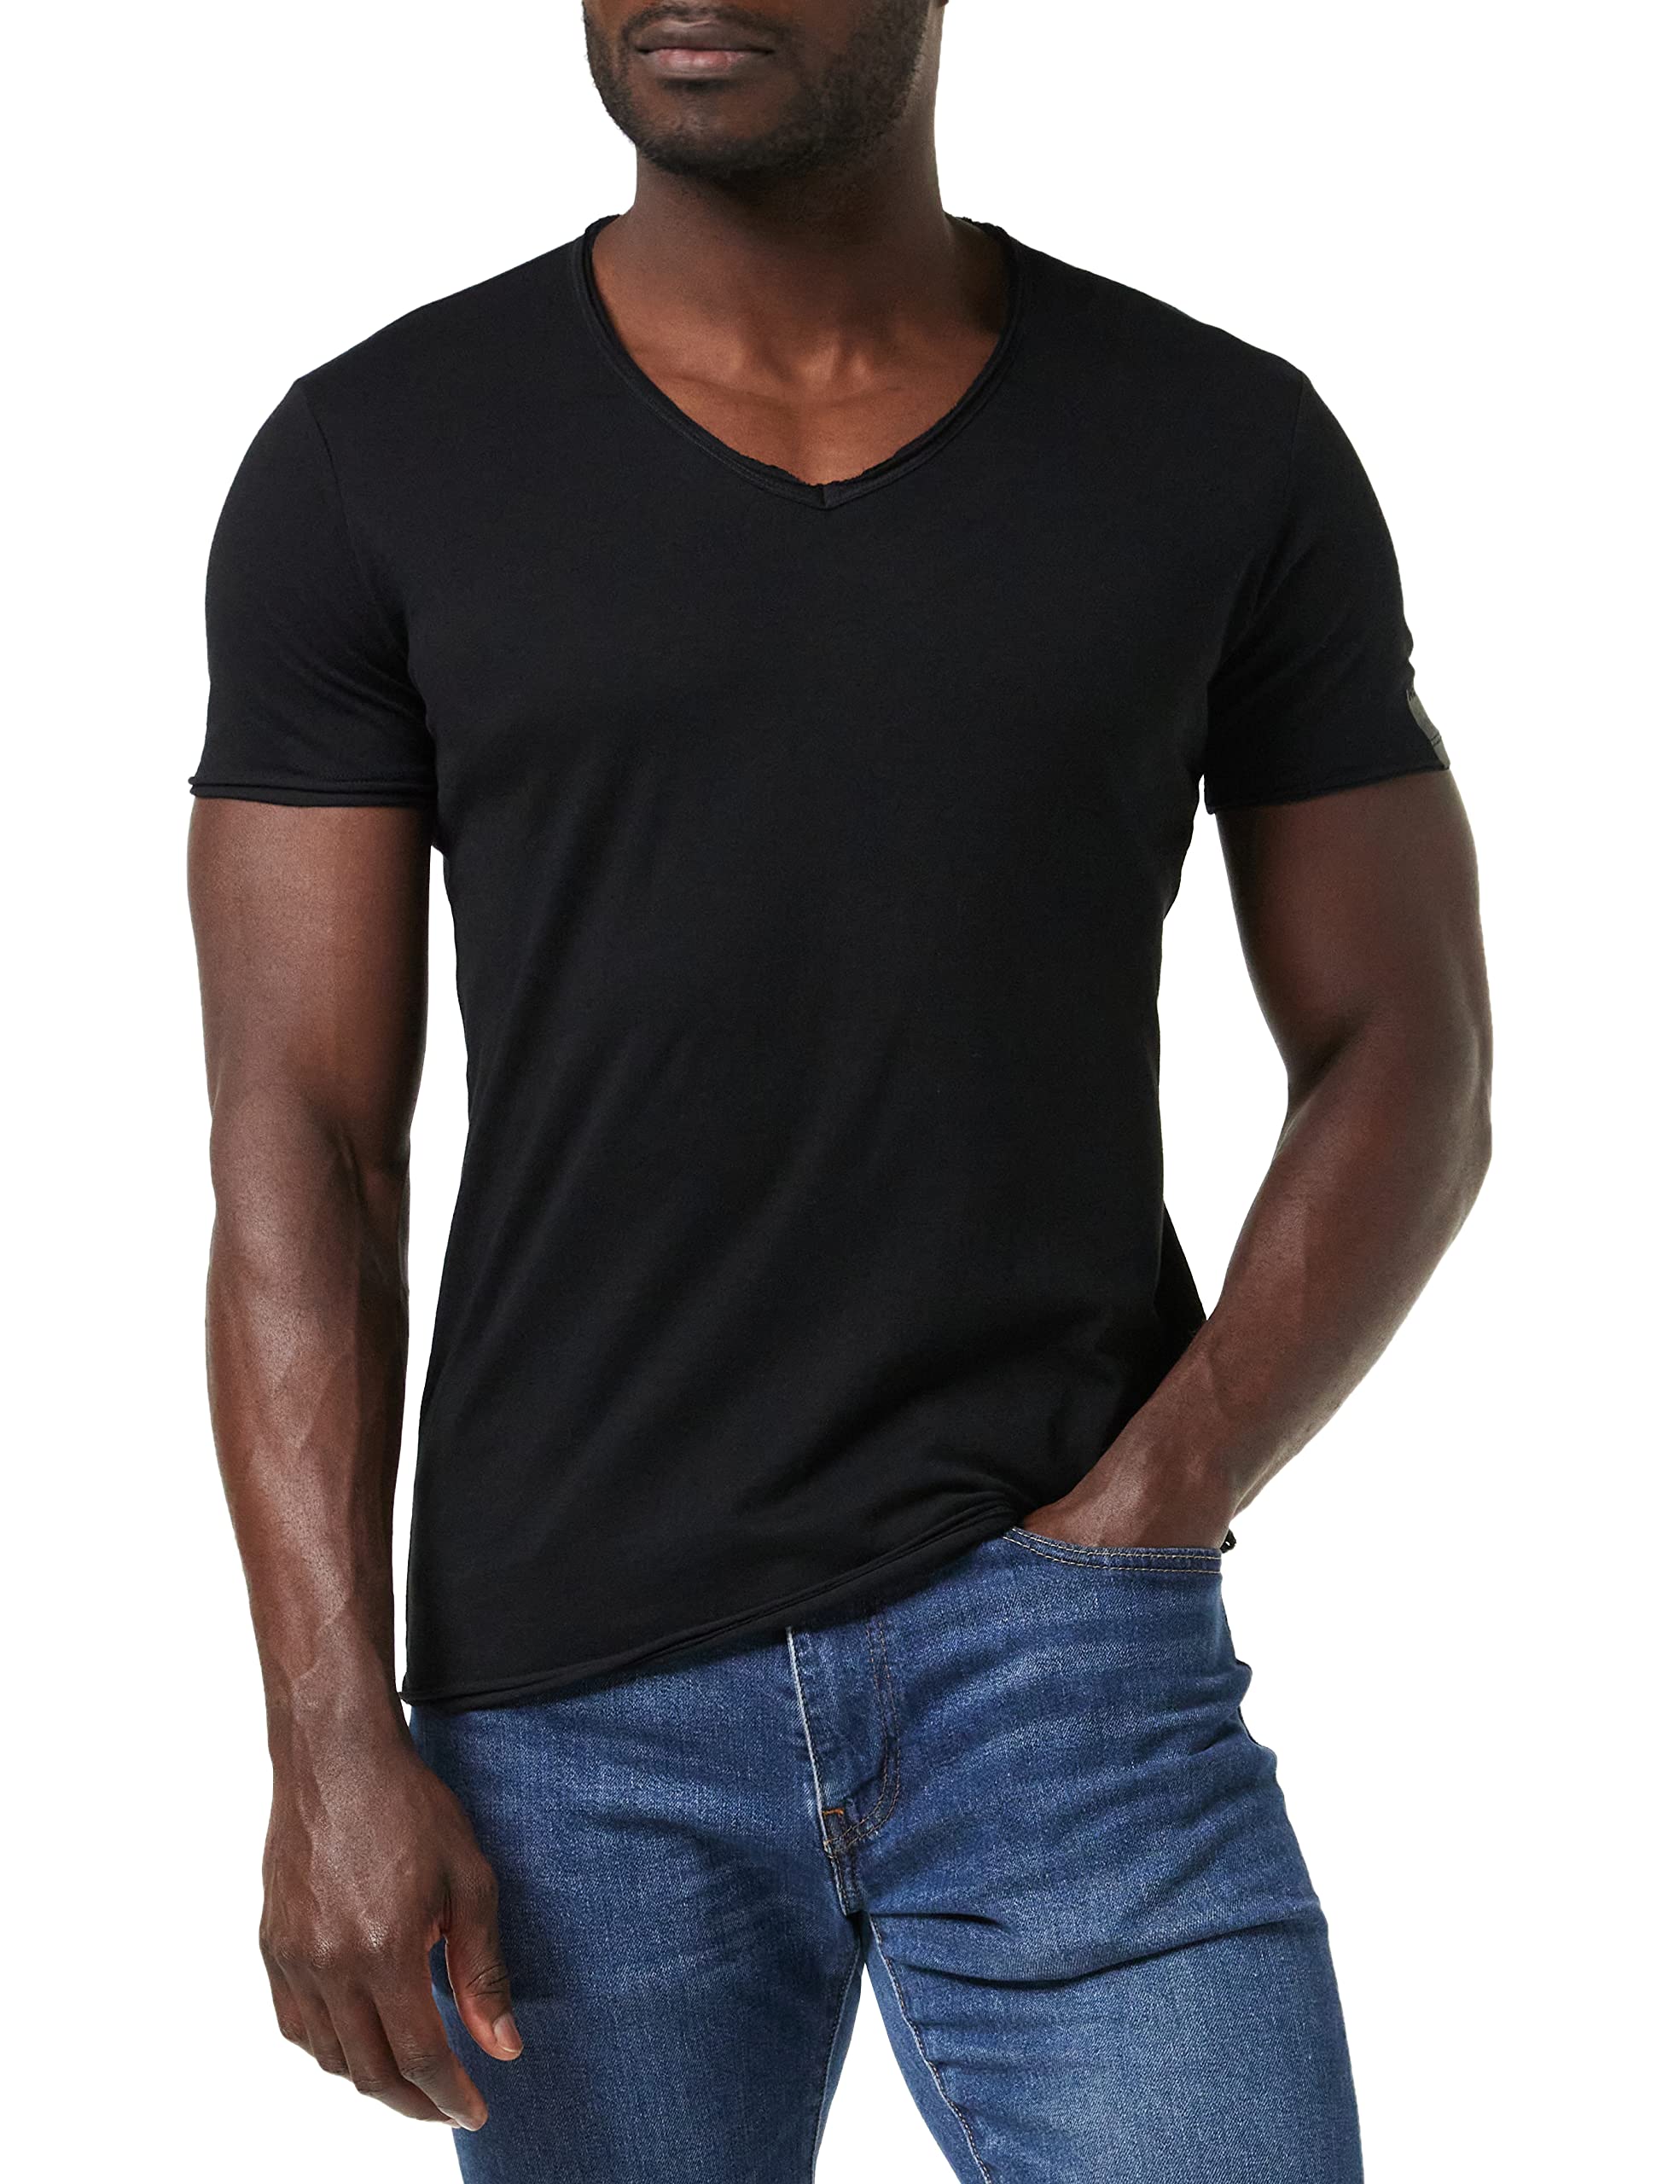 Replay Herren T-Shirt Kurzarm mit V-Ausschnitt, Black 098 (Schwarz), XXL